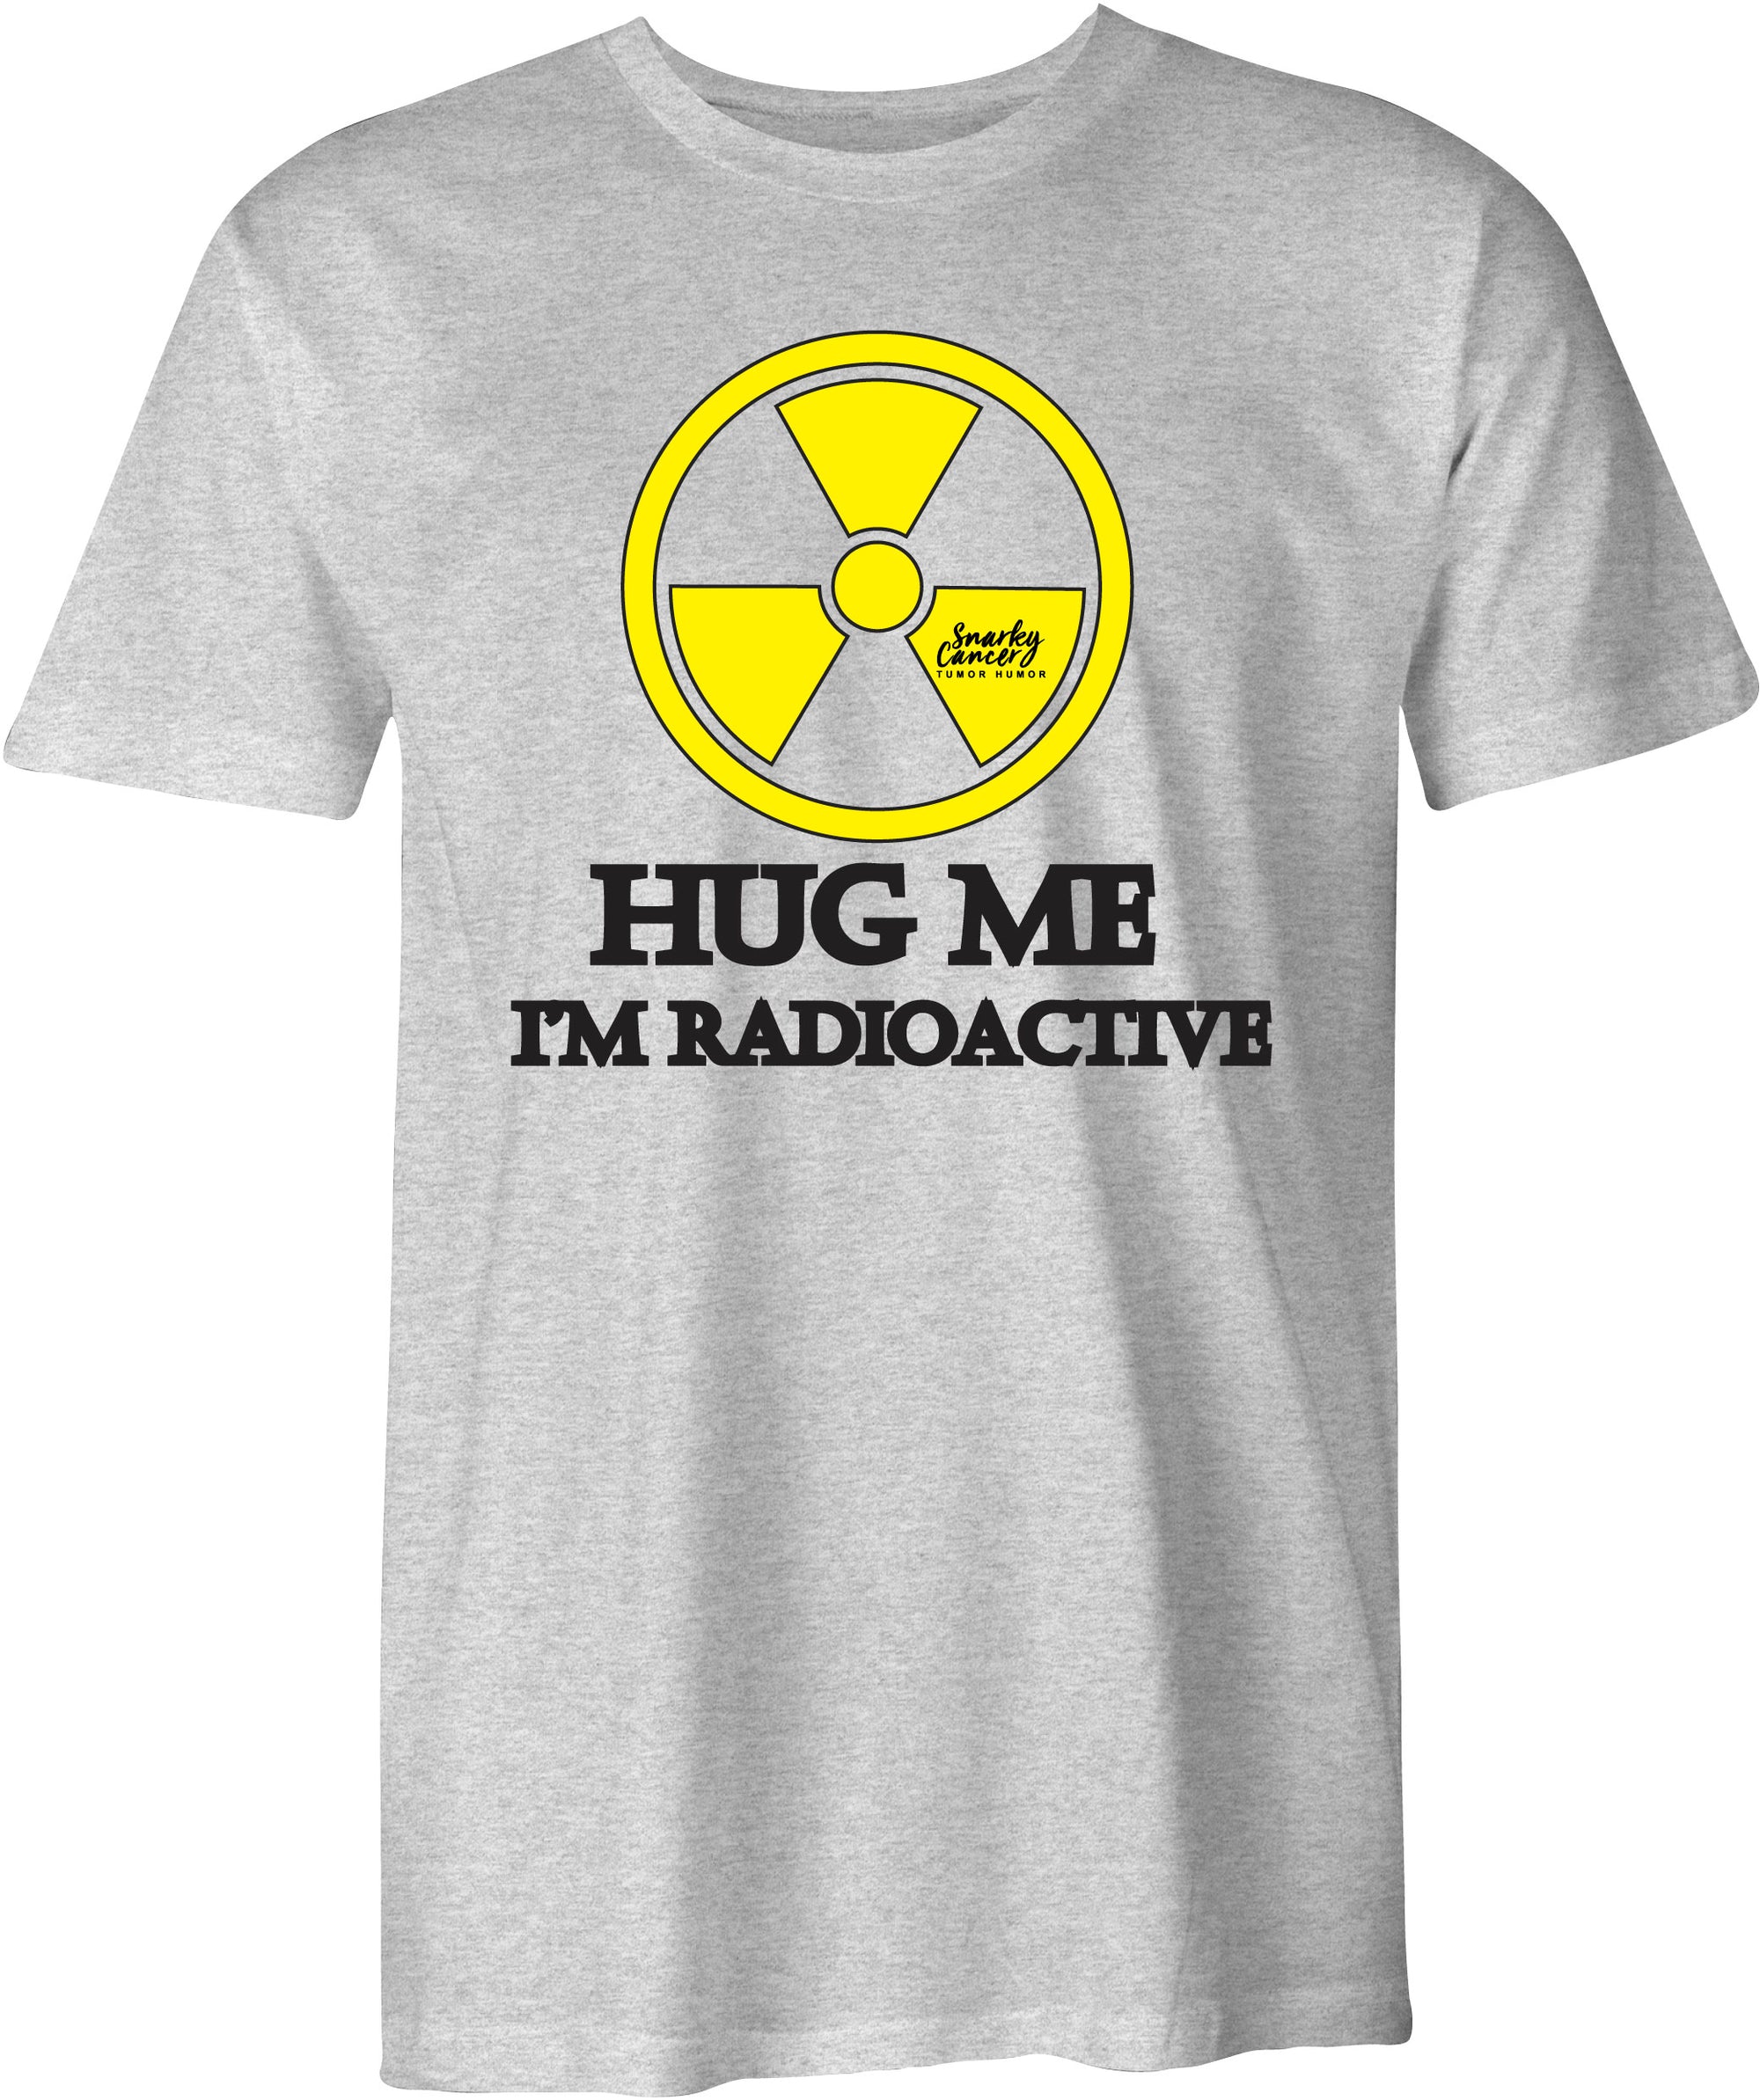 Hug Me I'm Radioactive Tee